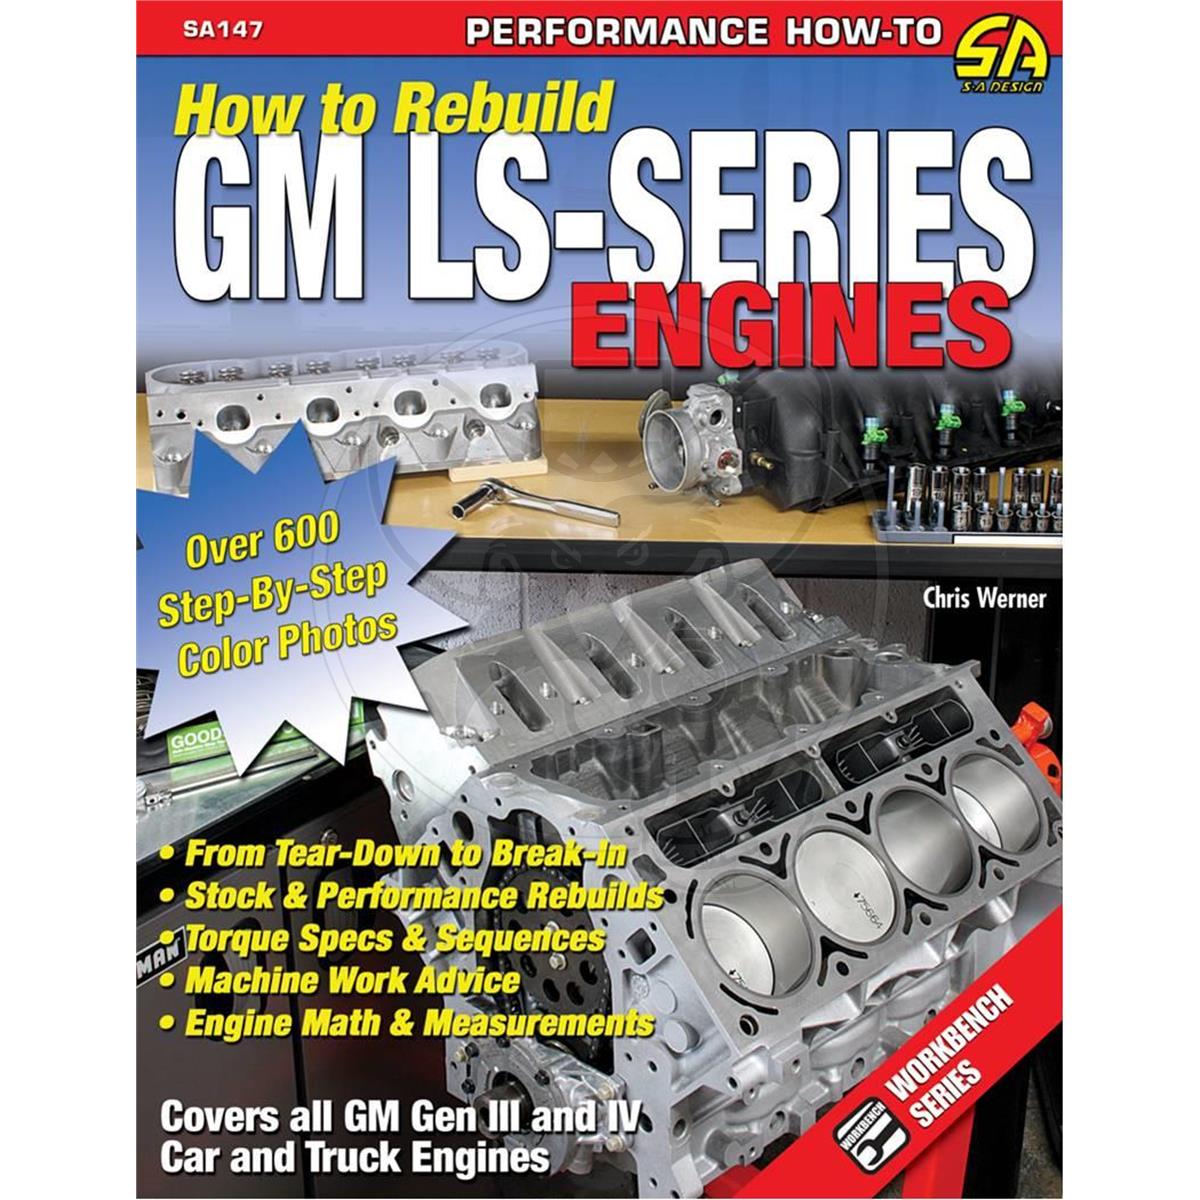 SA DESIGN BOOK HOW TO REBUILD GEN 3 & GEN 4 GM CHEV LS ENGINES